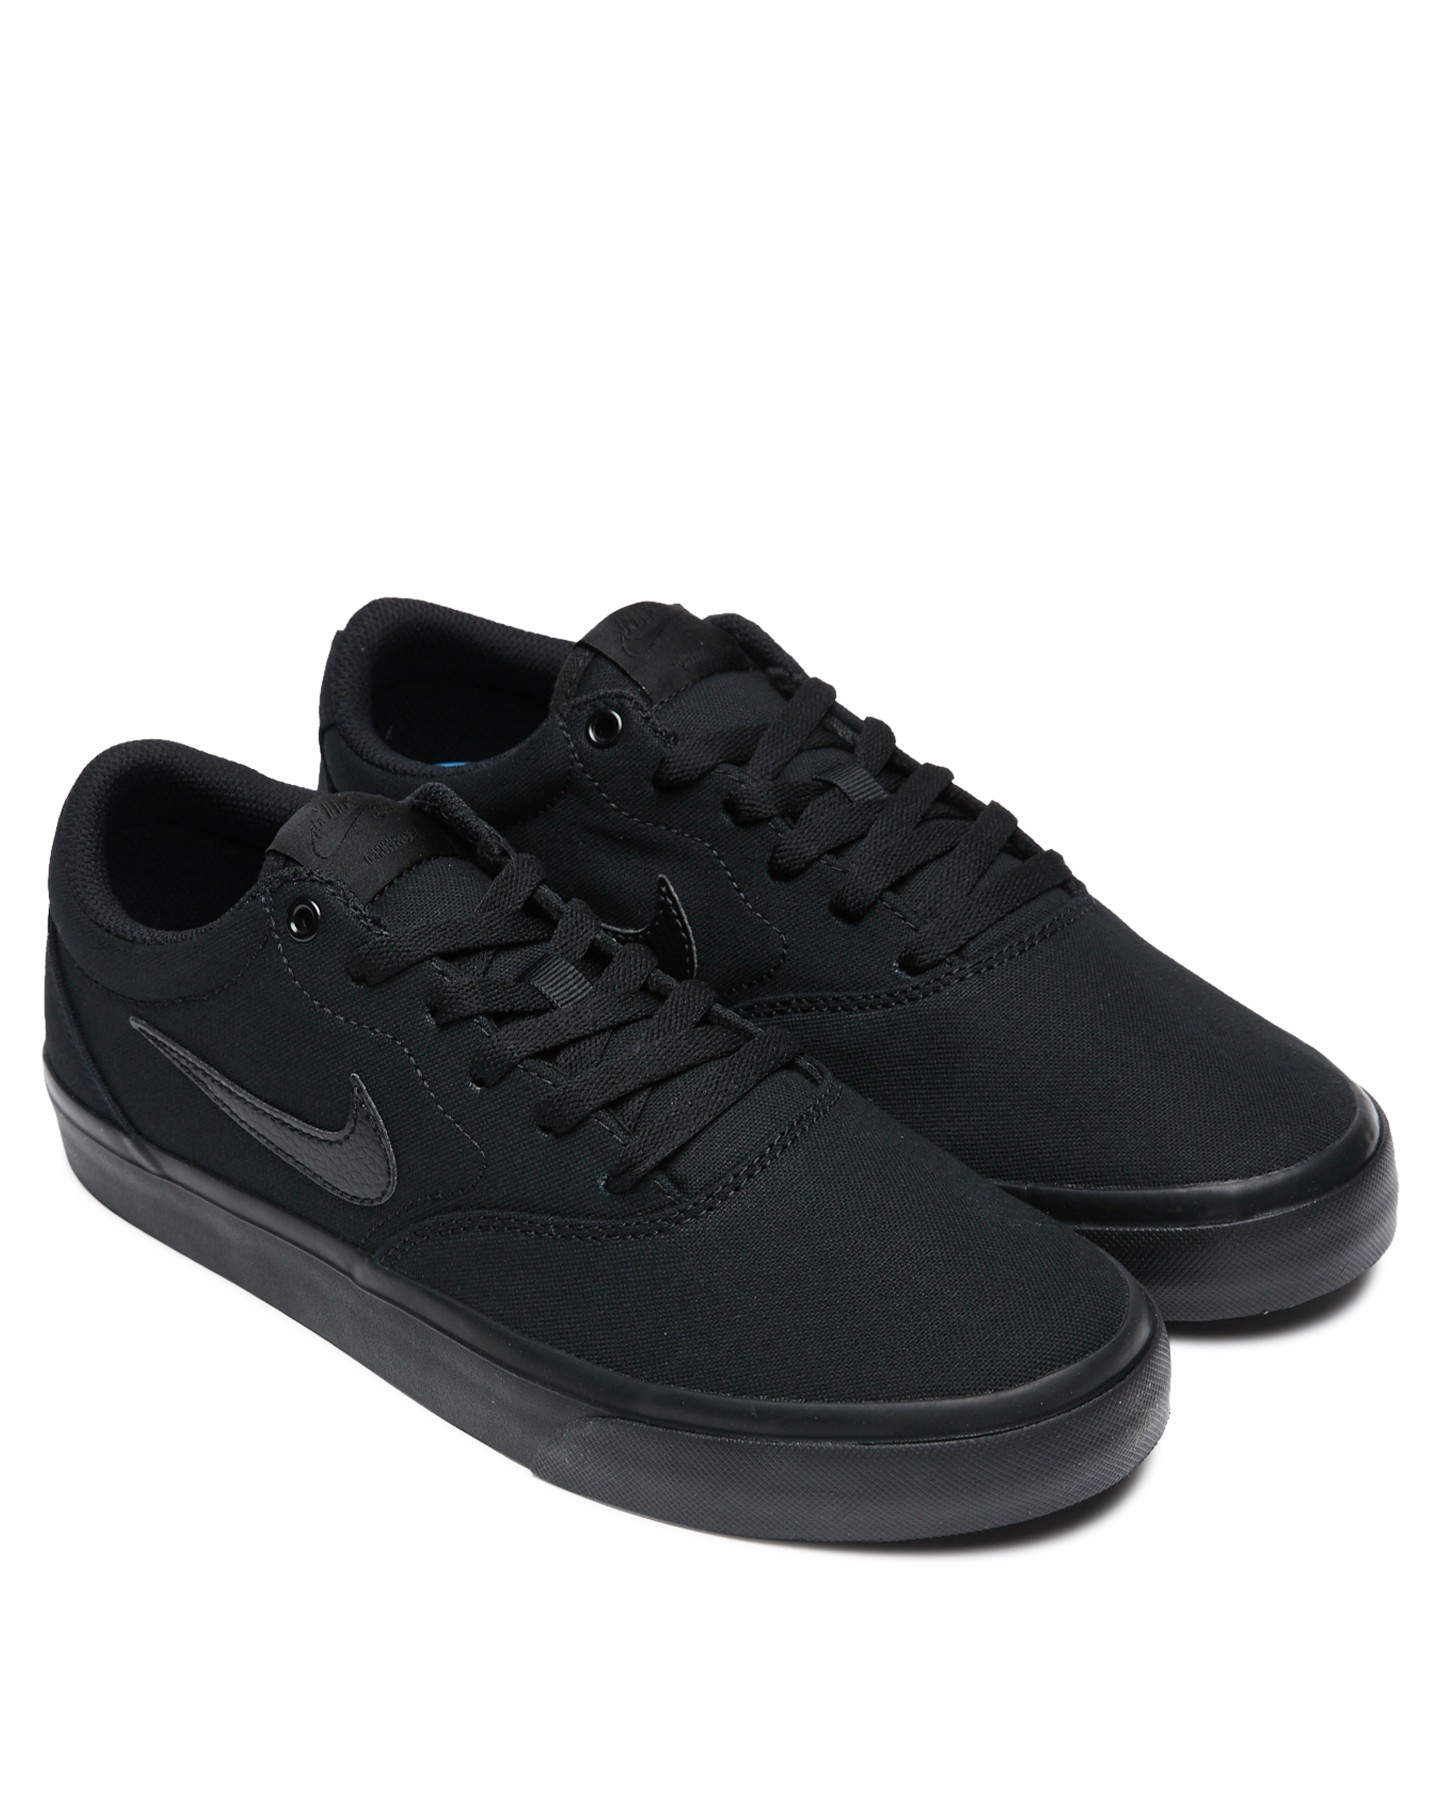 Nike Sb Charge Canvas Shoe - Black Black | SurfStitch